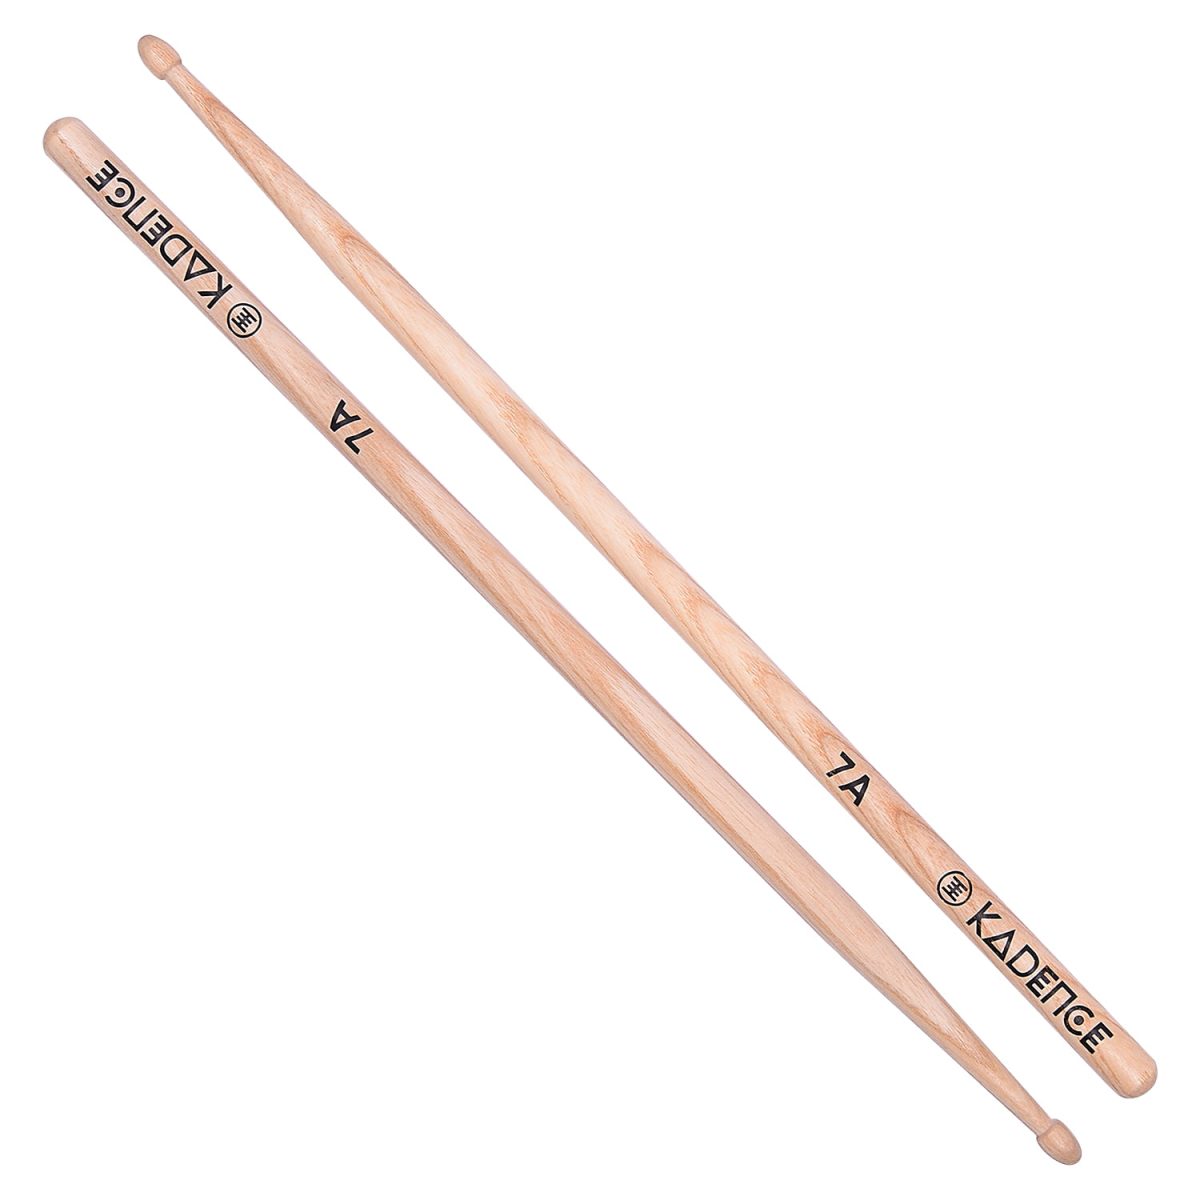 Kadence Drum Stick Hickory Wooden Tip 7A